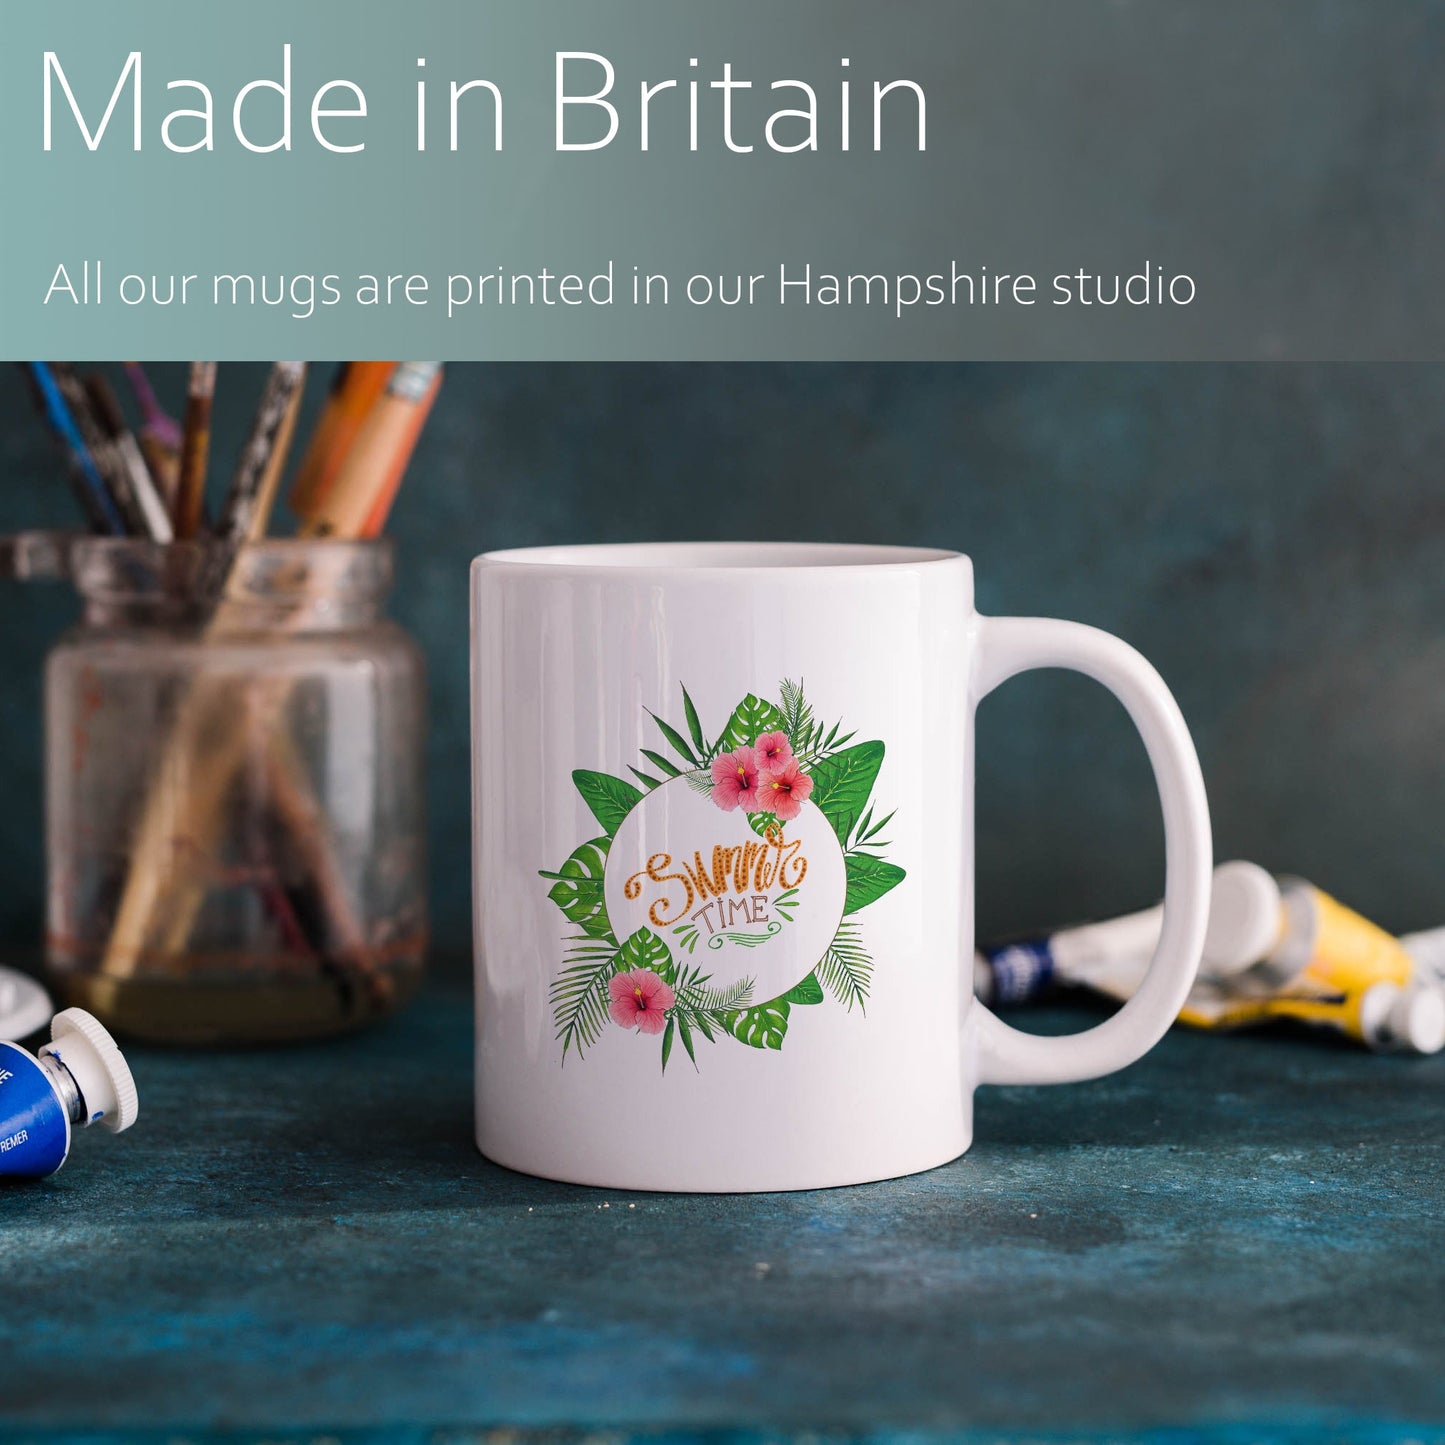 Summer time | Ceramic mug-Ceramic mug-Adnil Creations